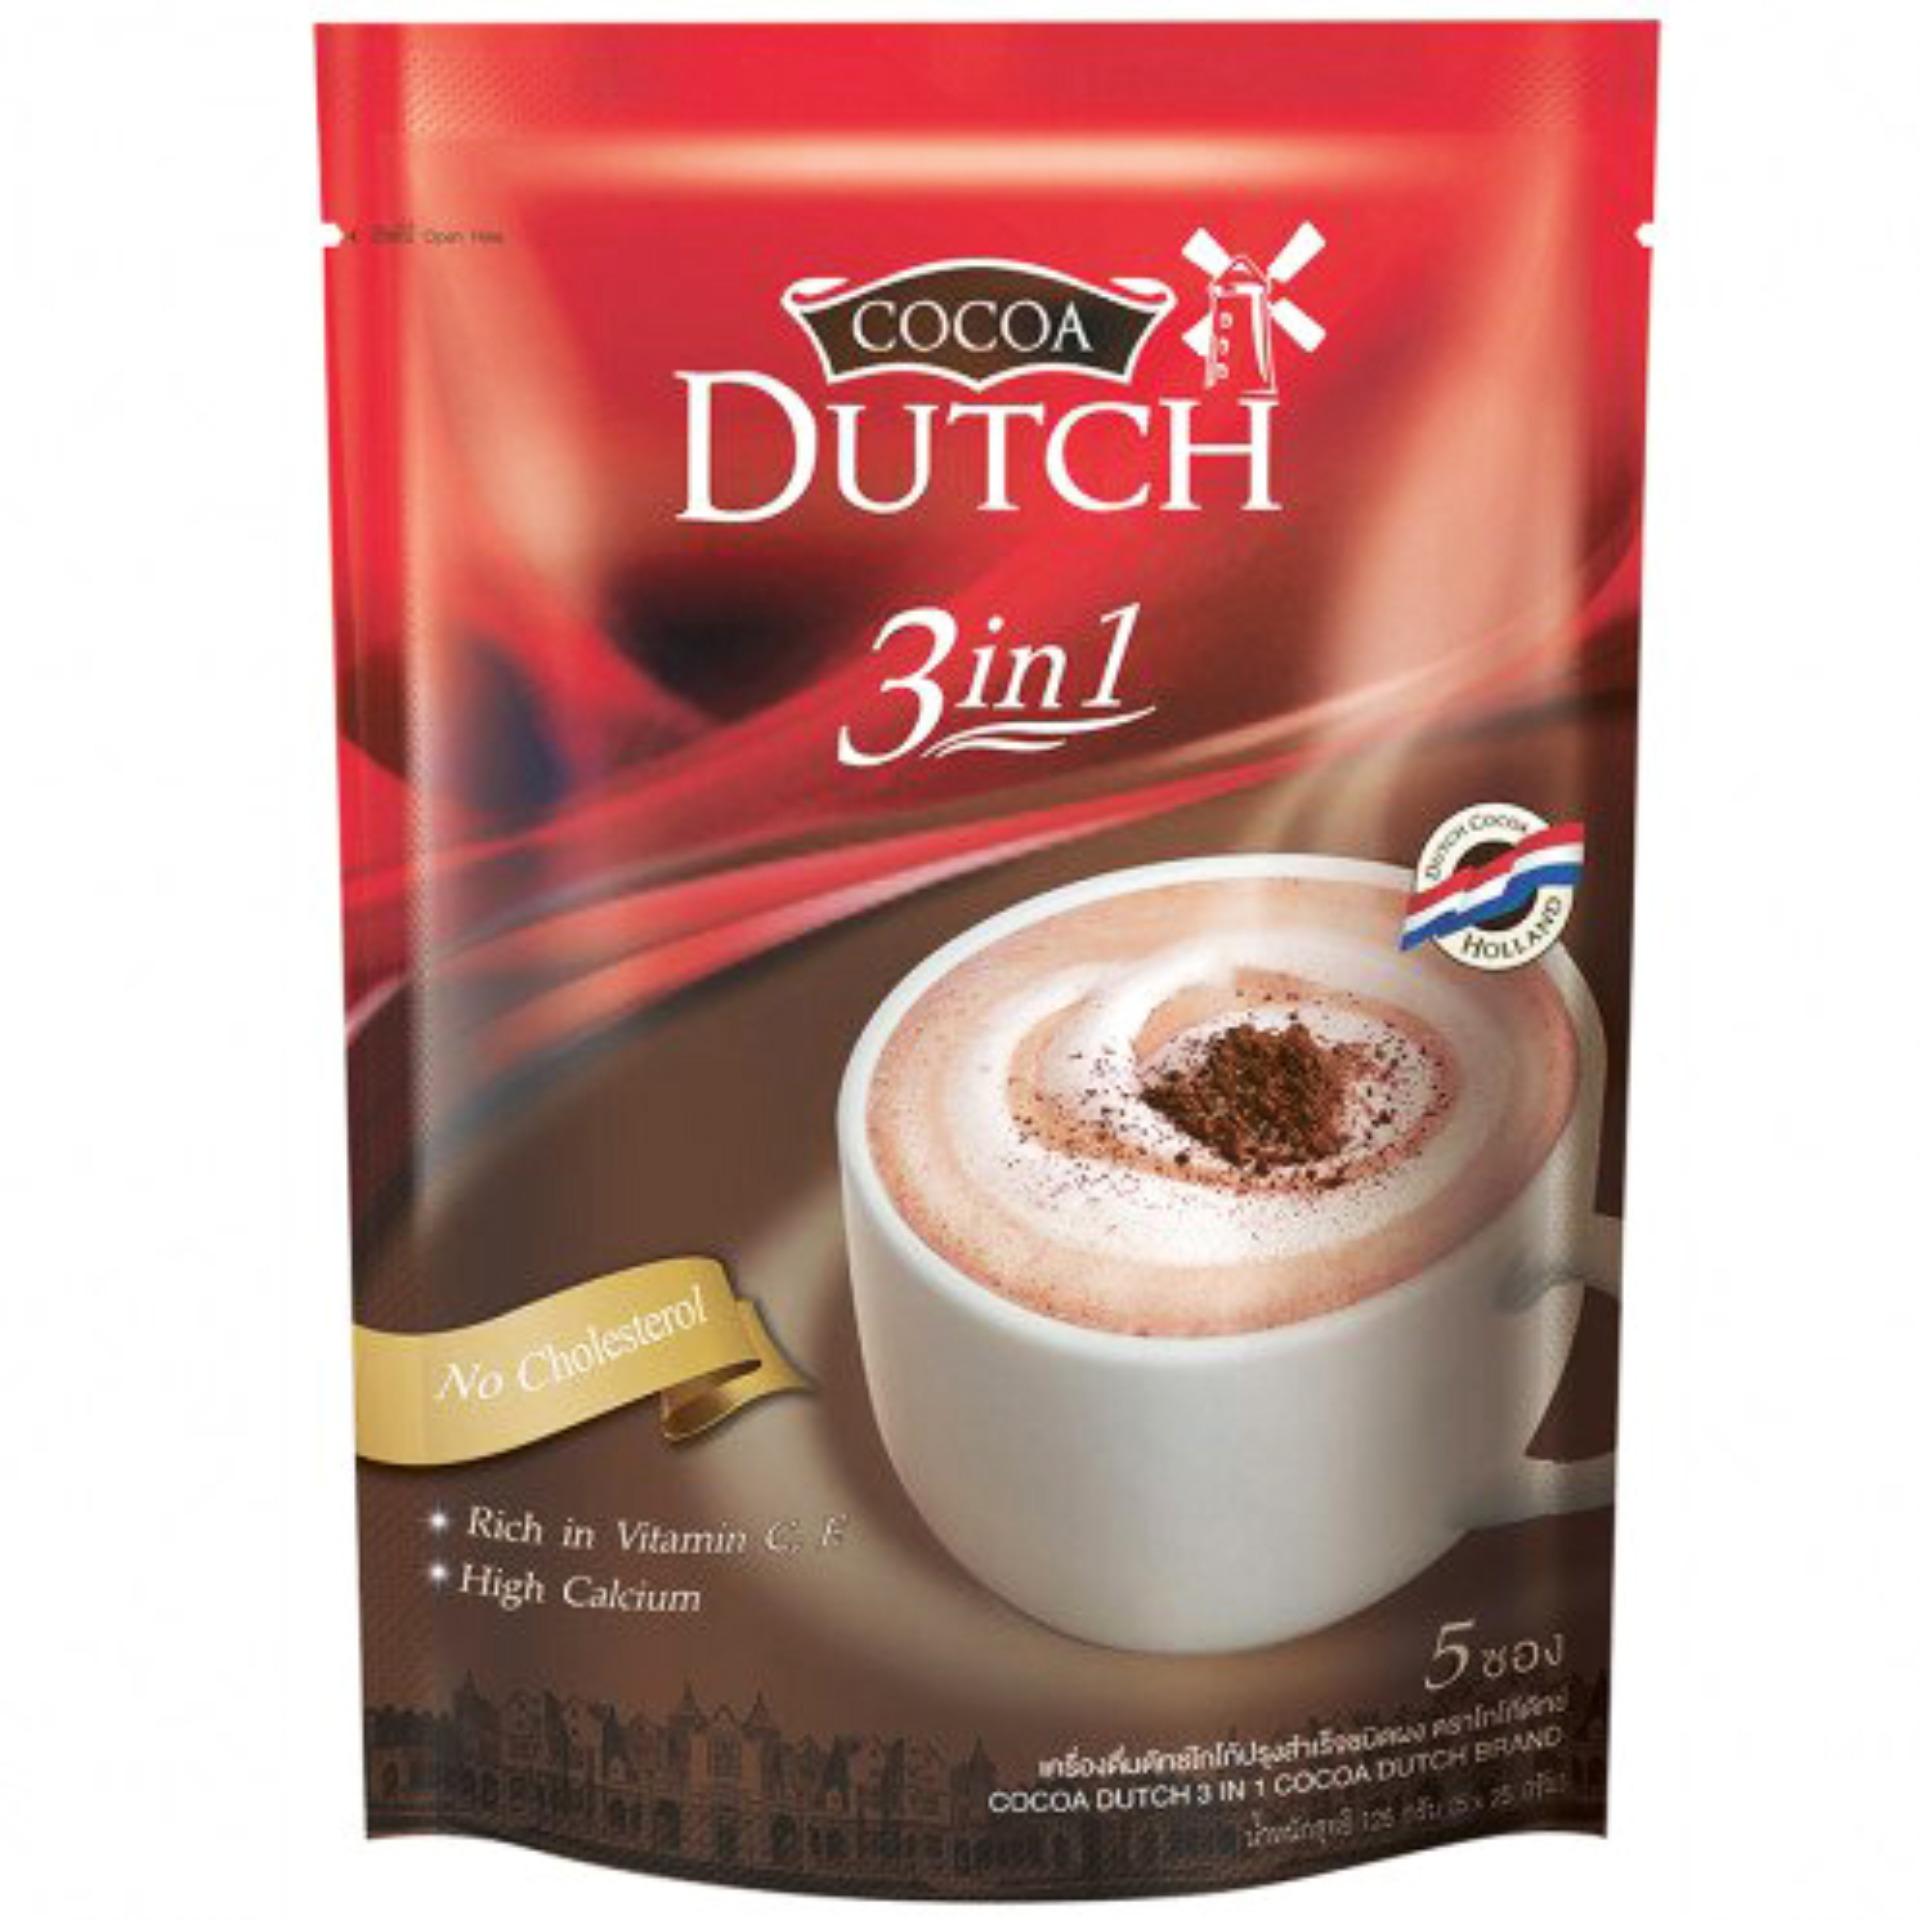 Cocoa Dutch - เครื่องดื่มโกโก้ปรุงสำเร็จชนิดผง 3 in1 ขนาด 110กรัม (2 ถุง)